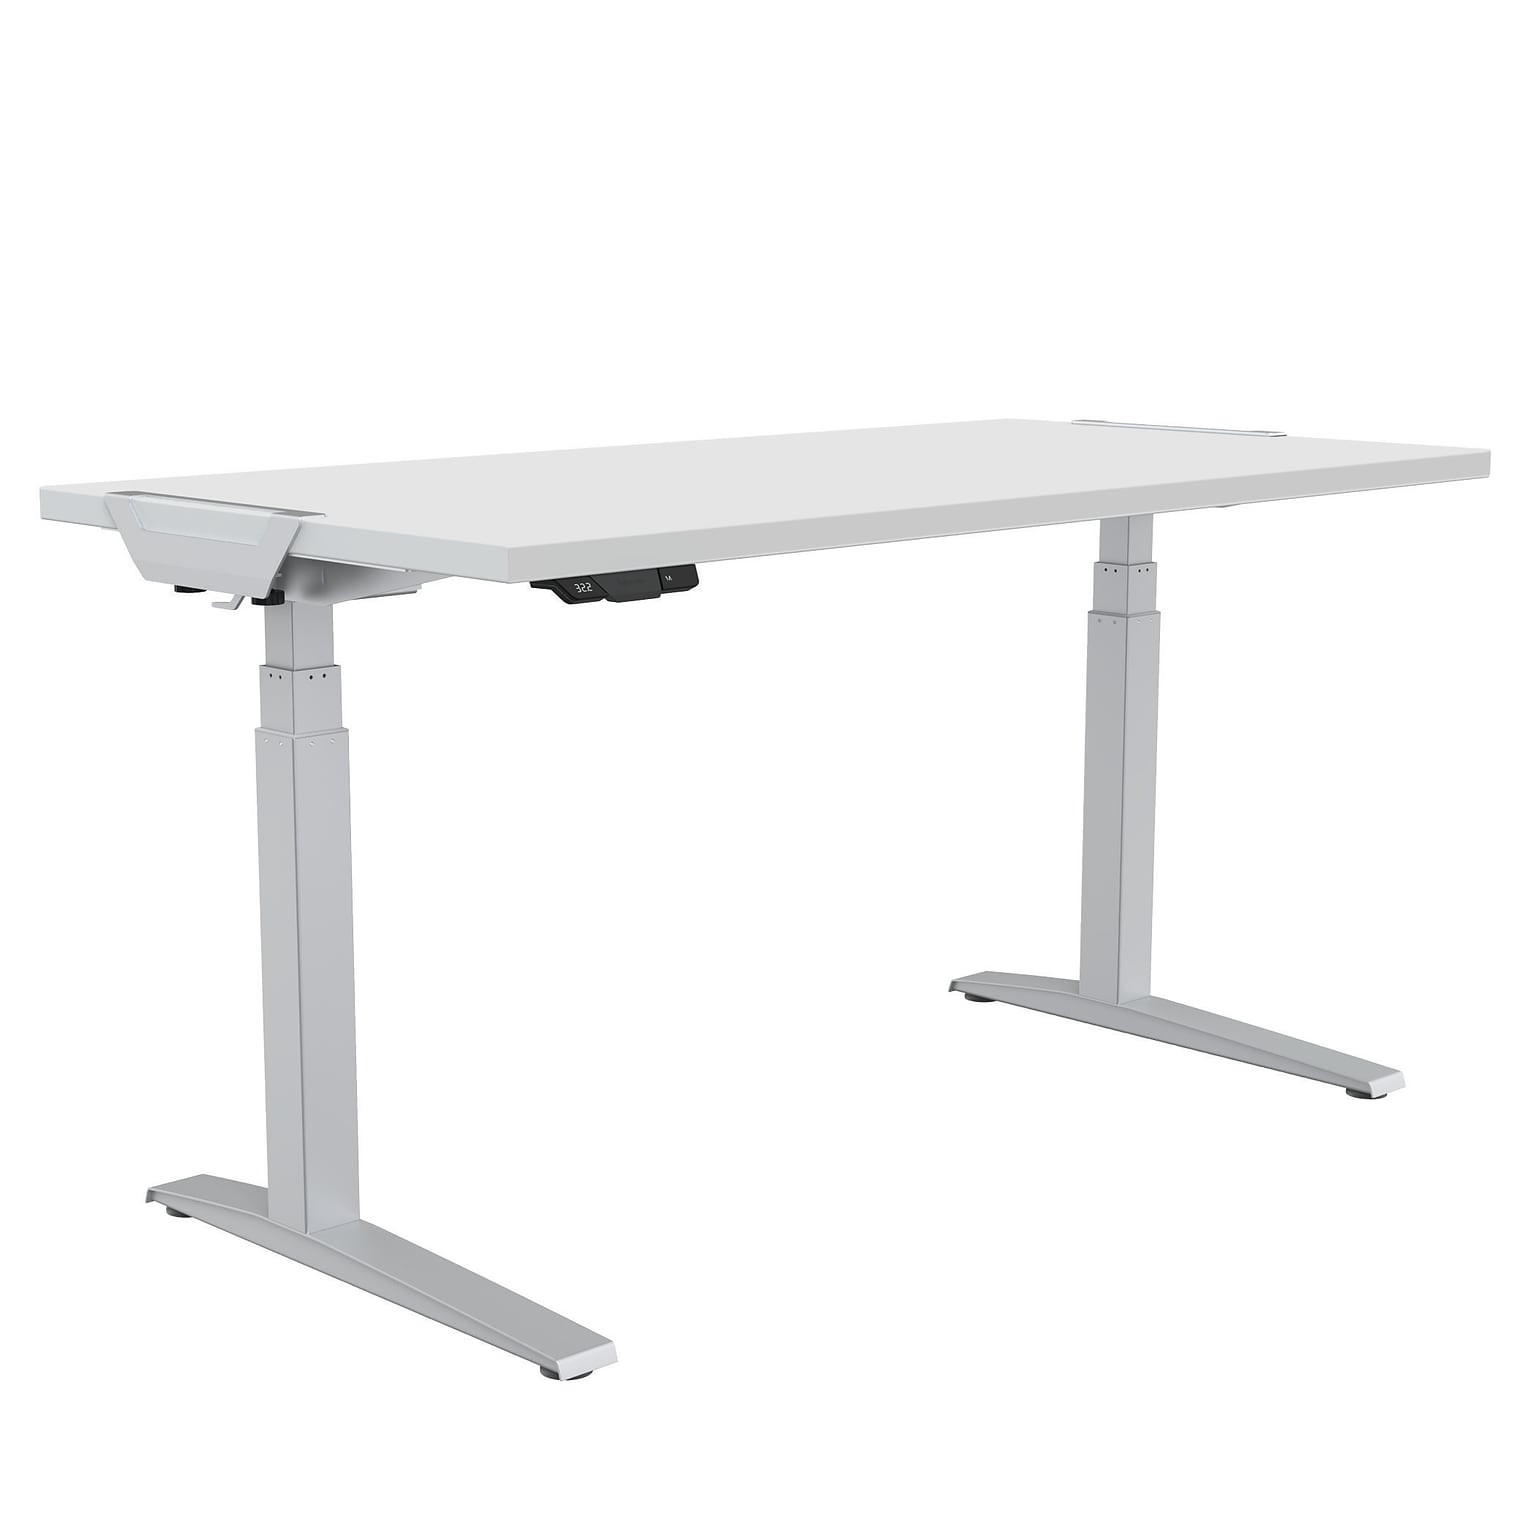 Fellowes Levado Desktop 60 x 30, White – Desk Base sold separately  (9649201)